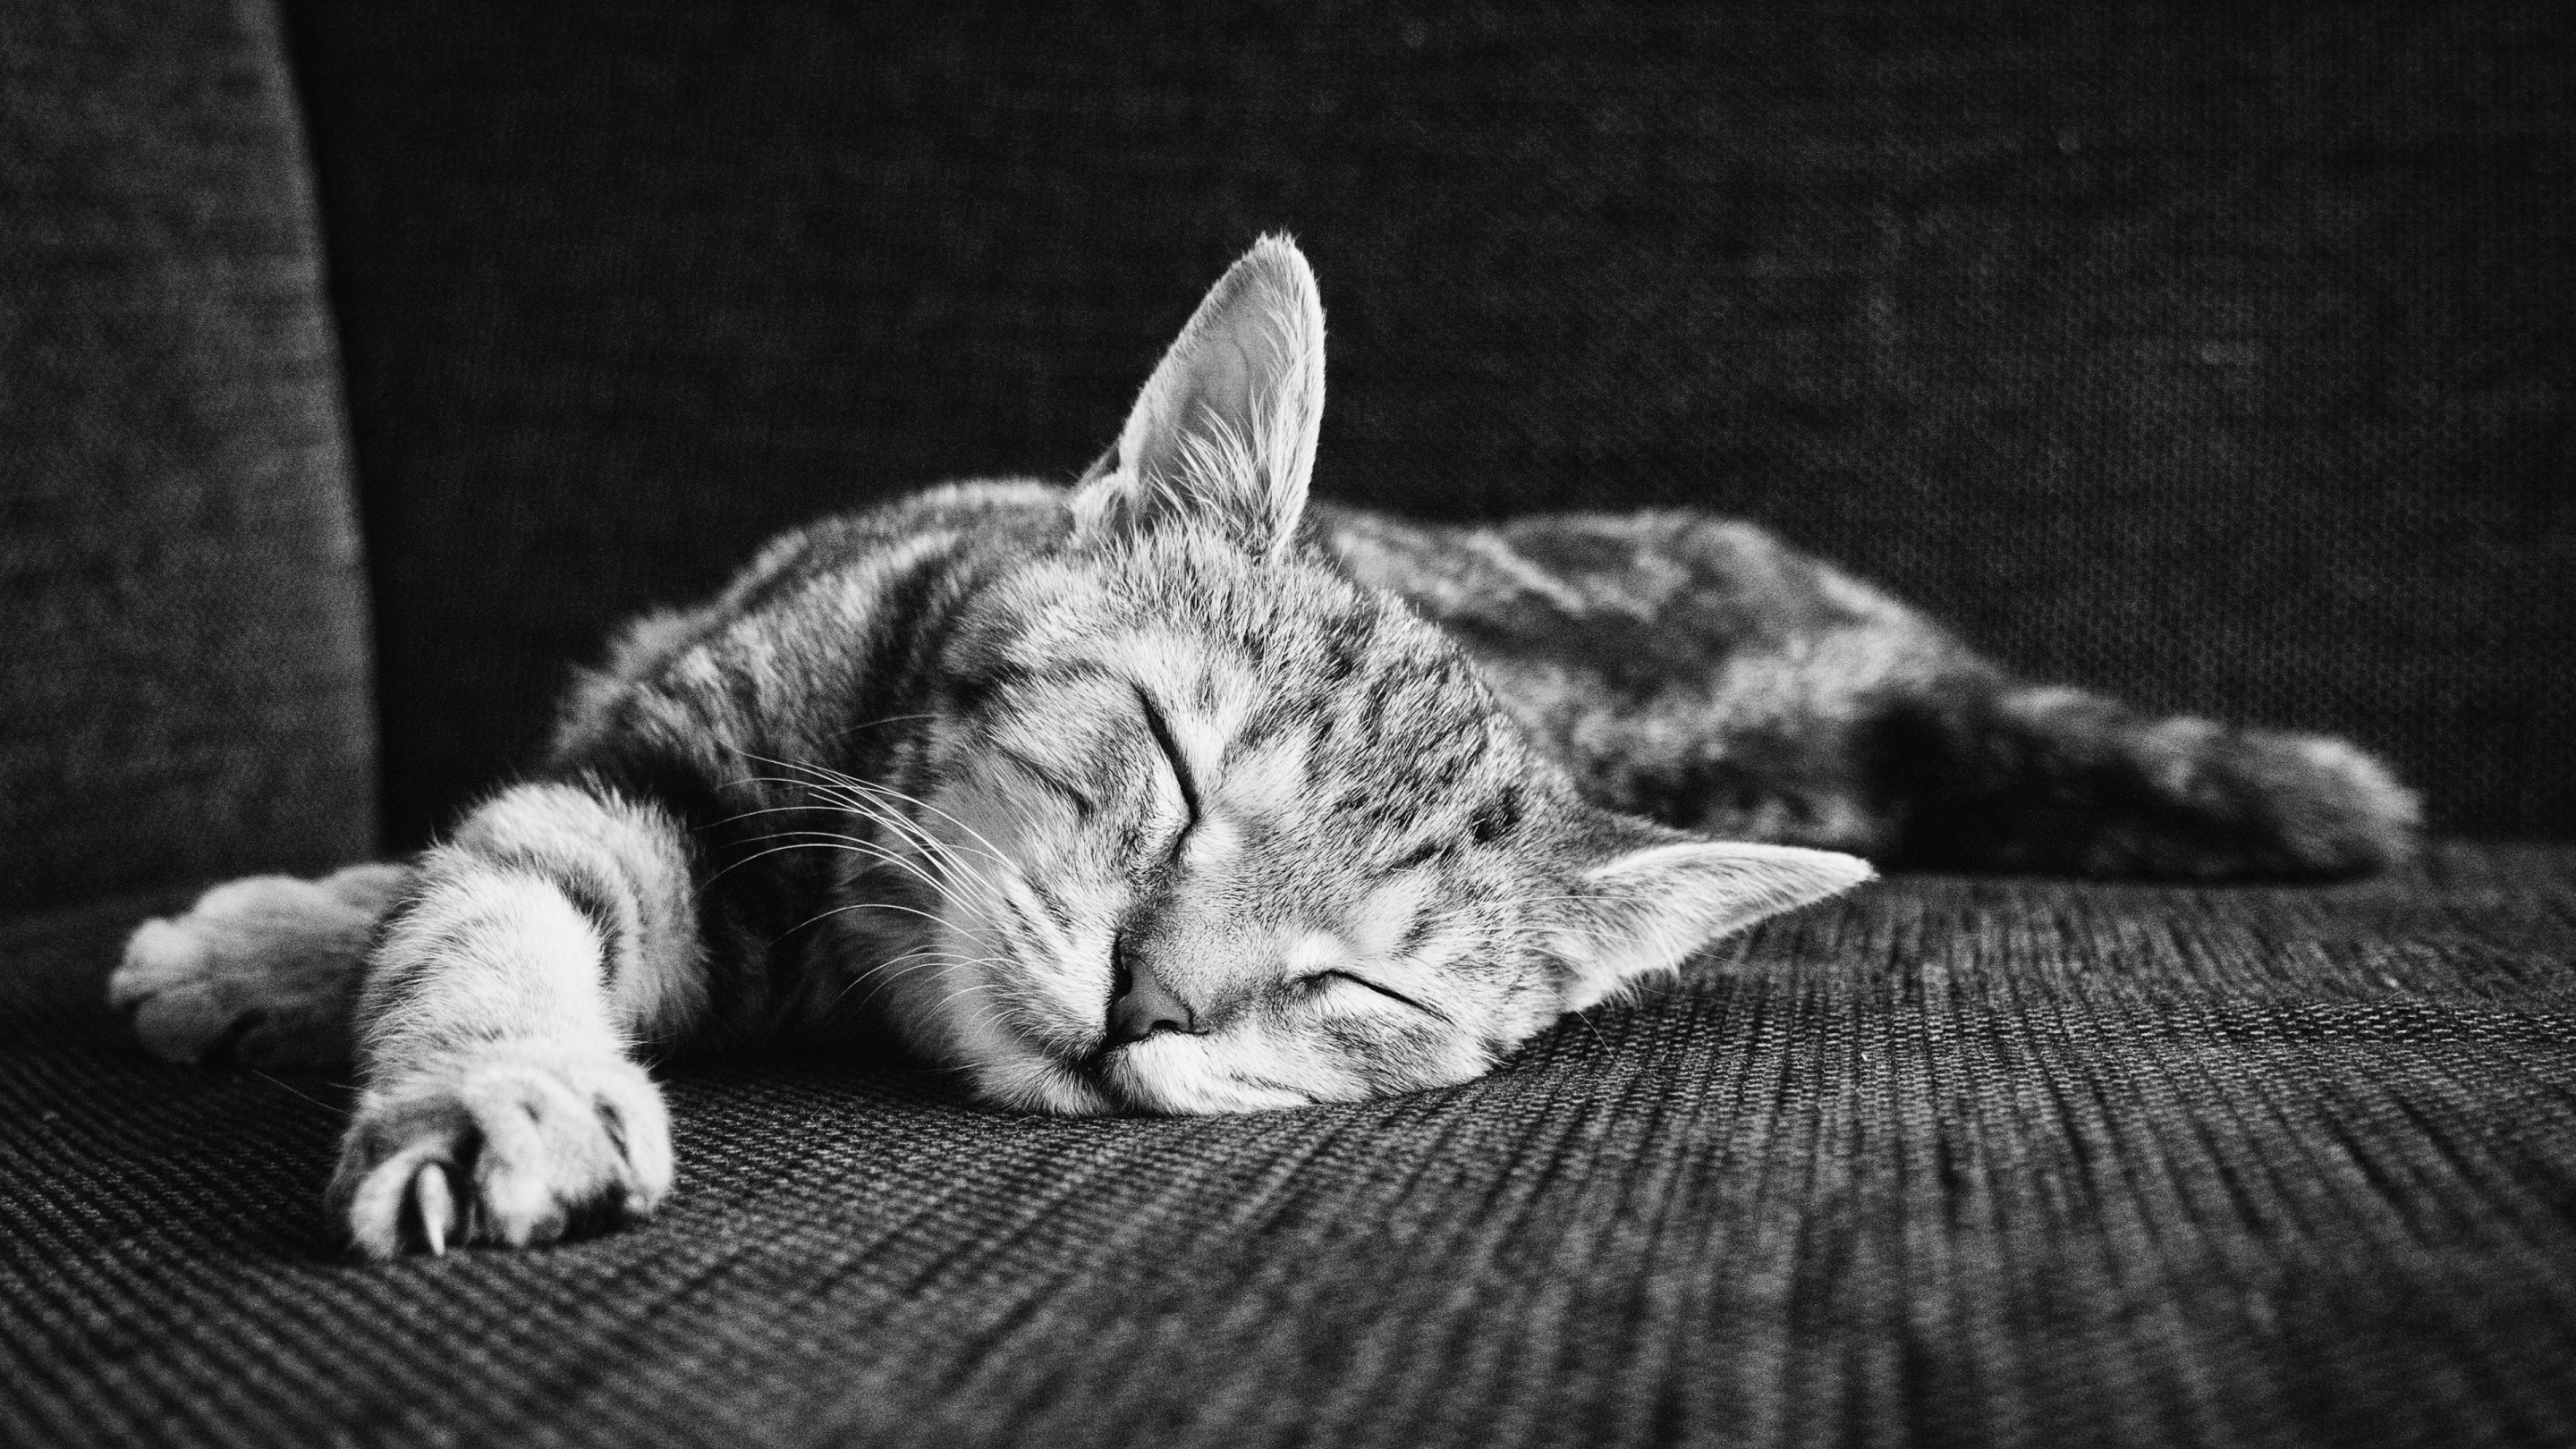 Zen of sleeping kitten wallpaper 2880x1620